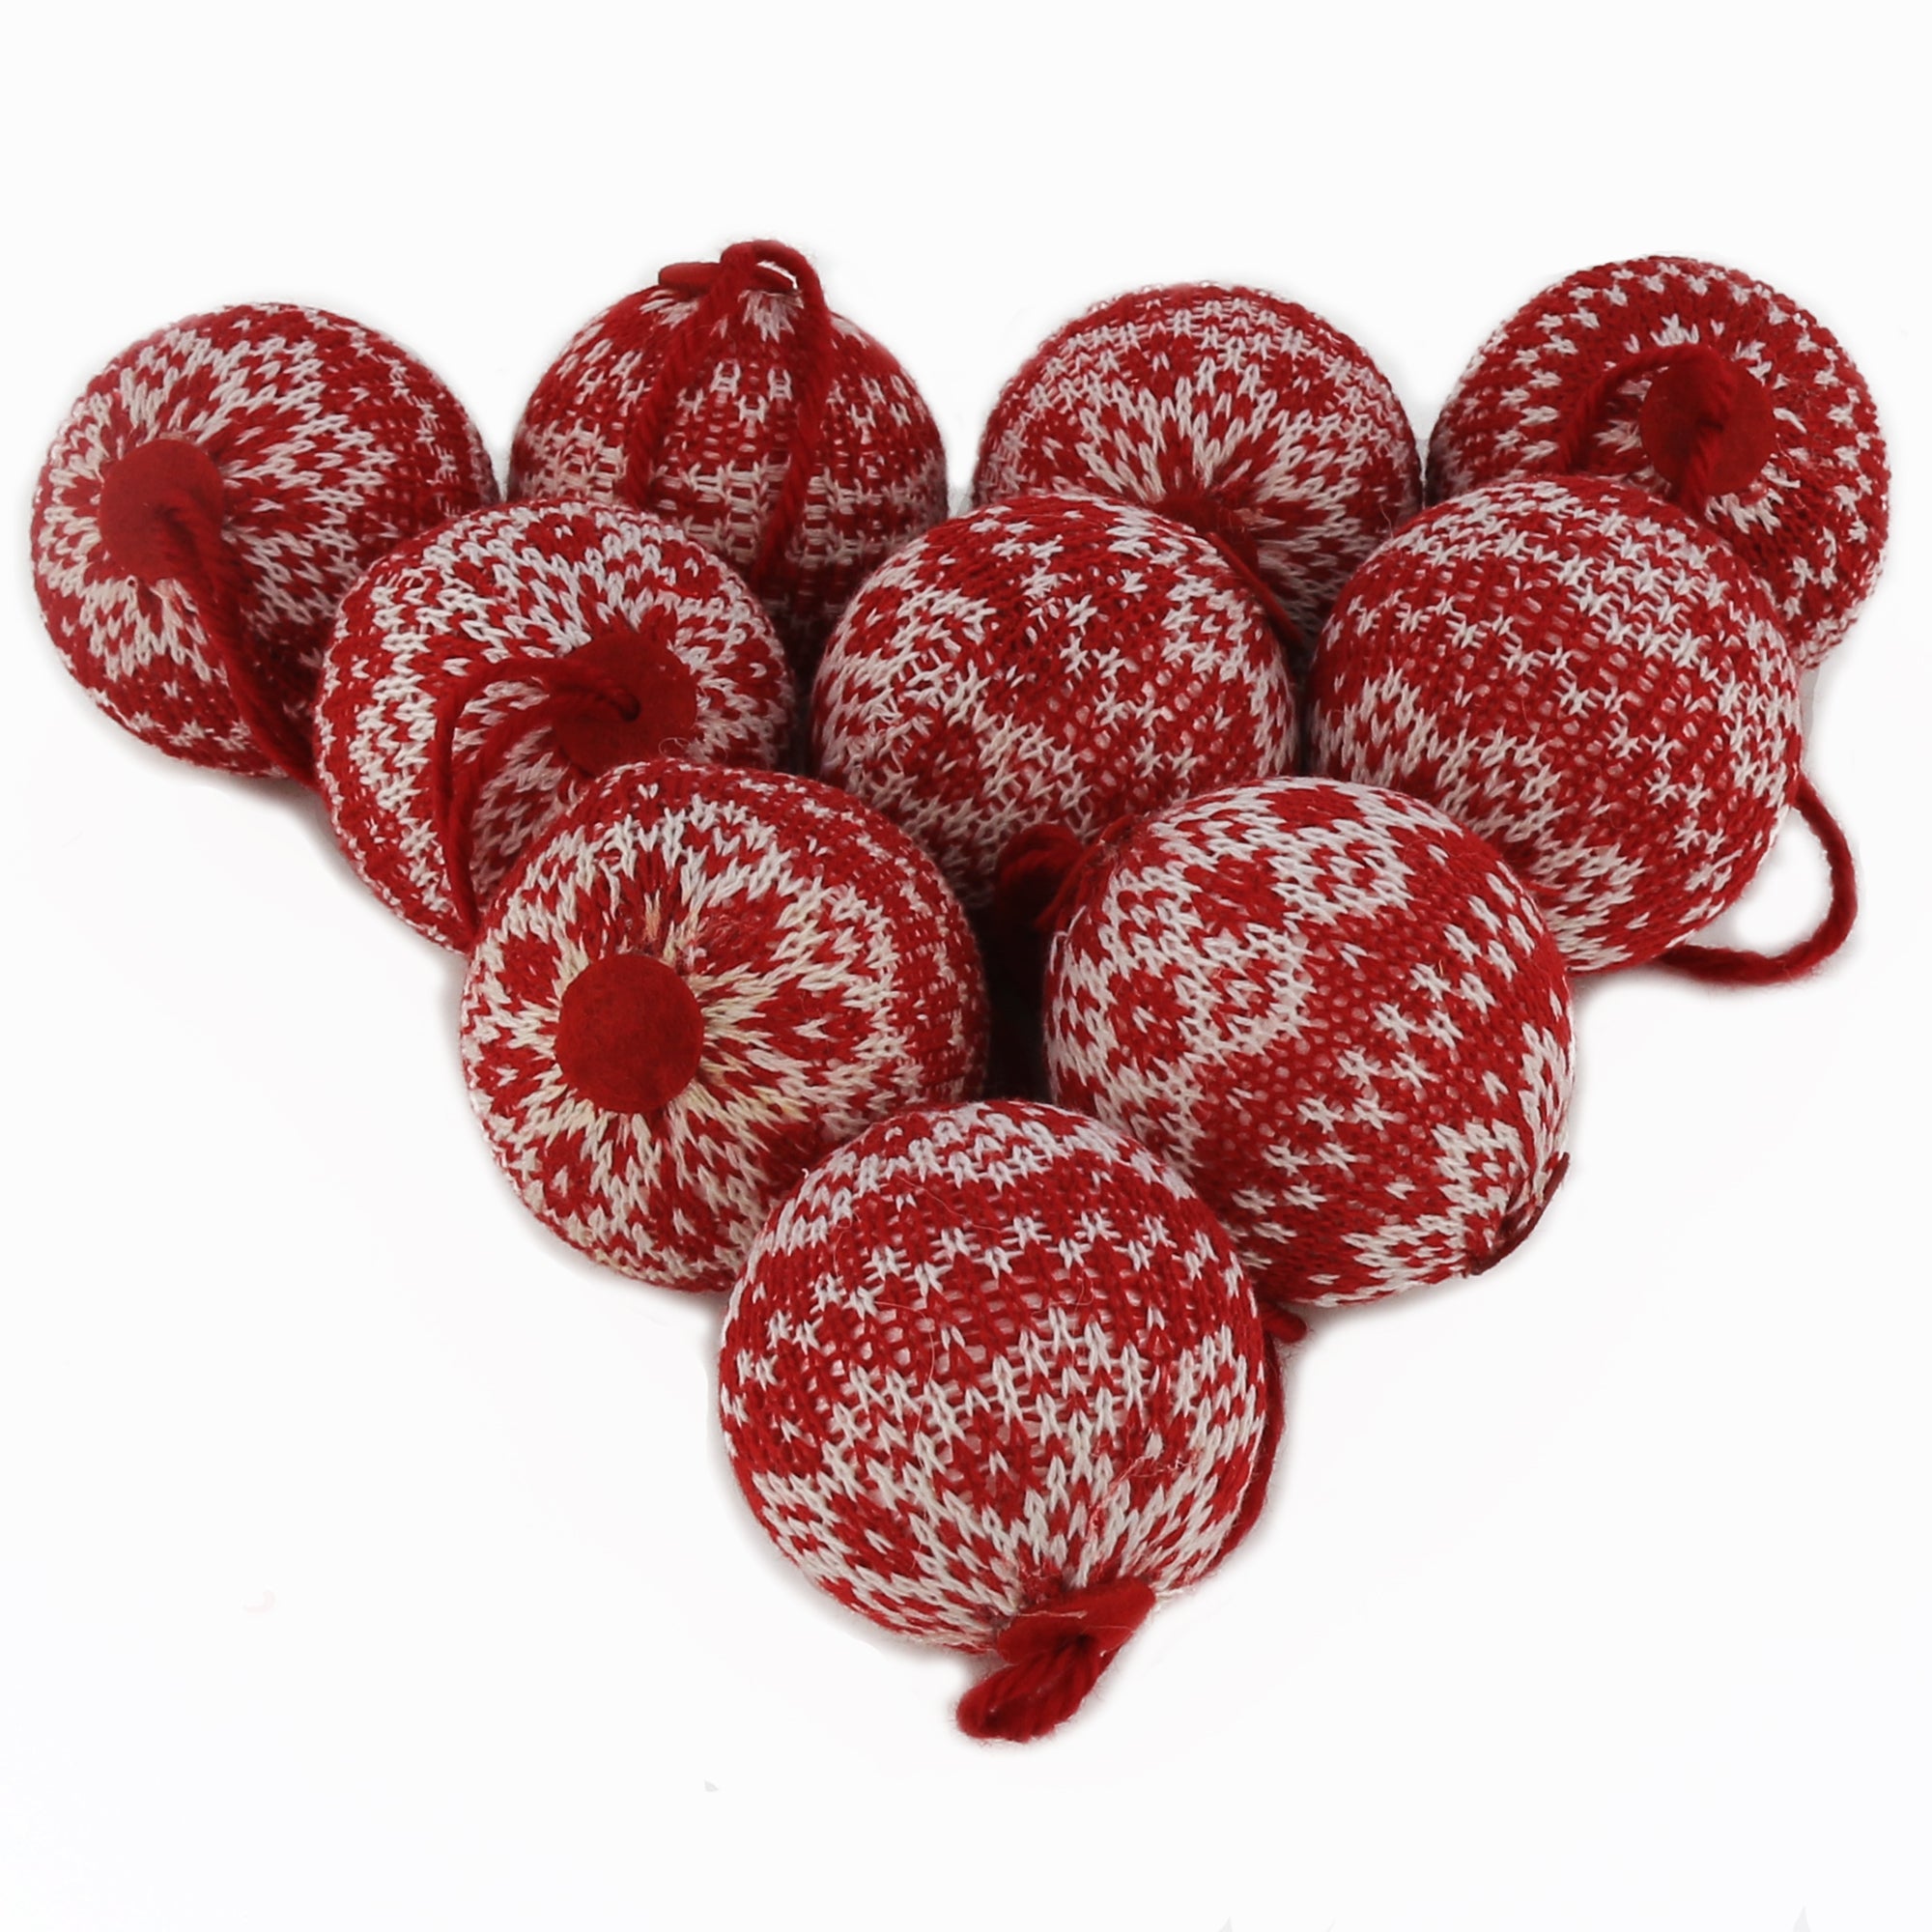 2.75" (70mm) knit Christmas ball ornaments,10 pcs | Bstaofy - Glow Guards